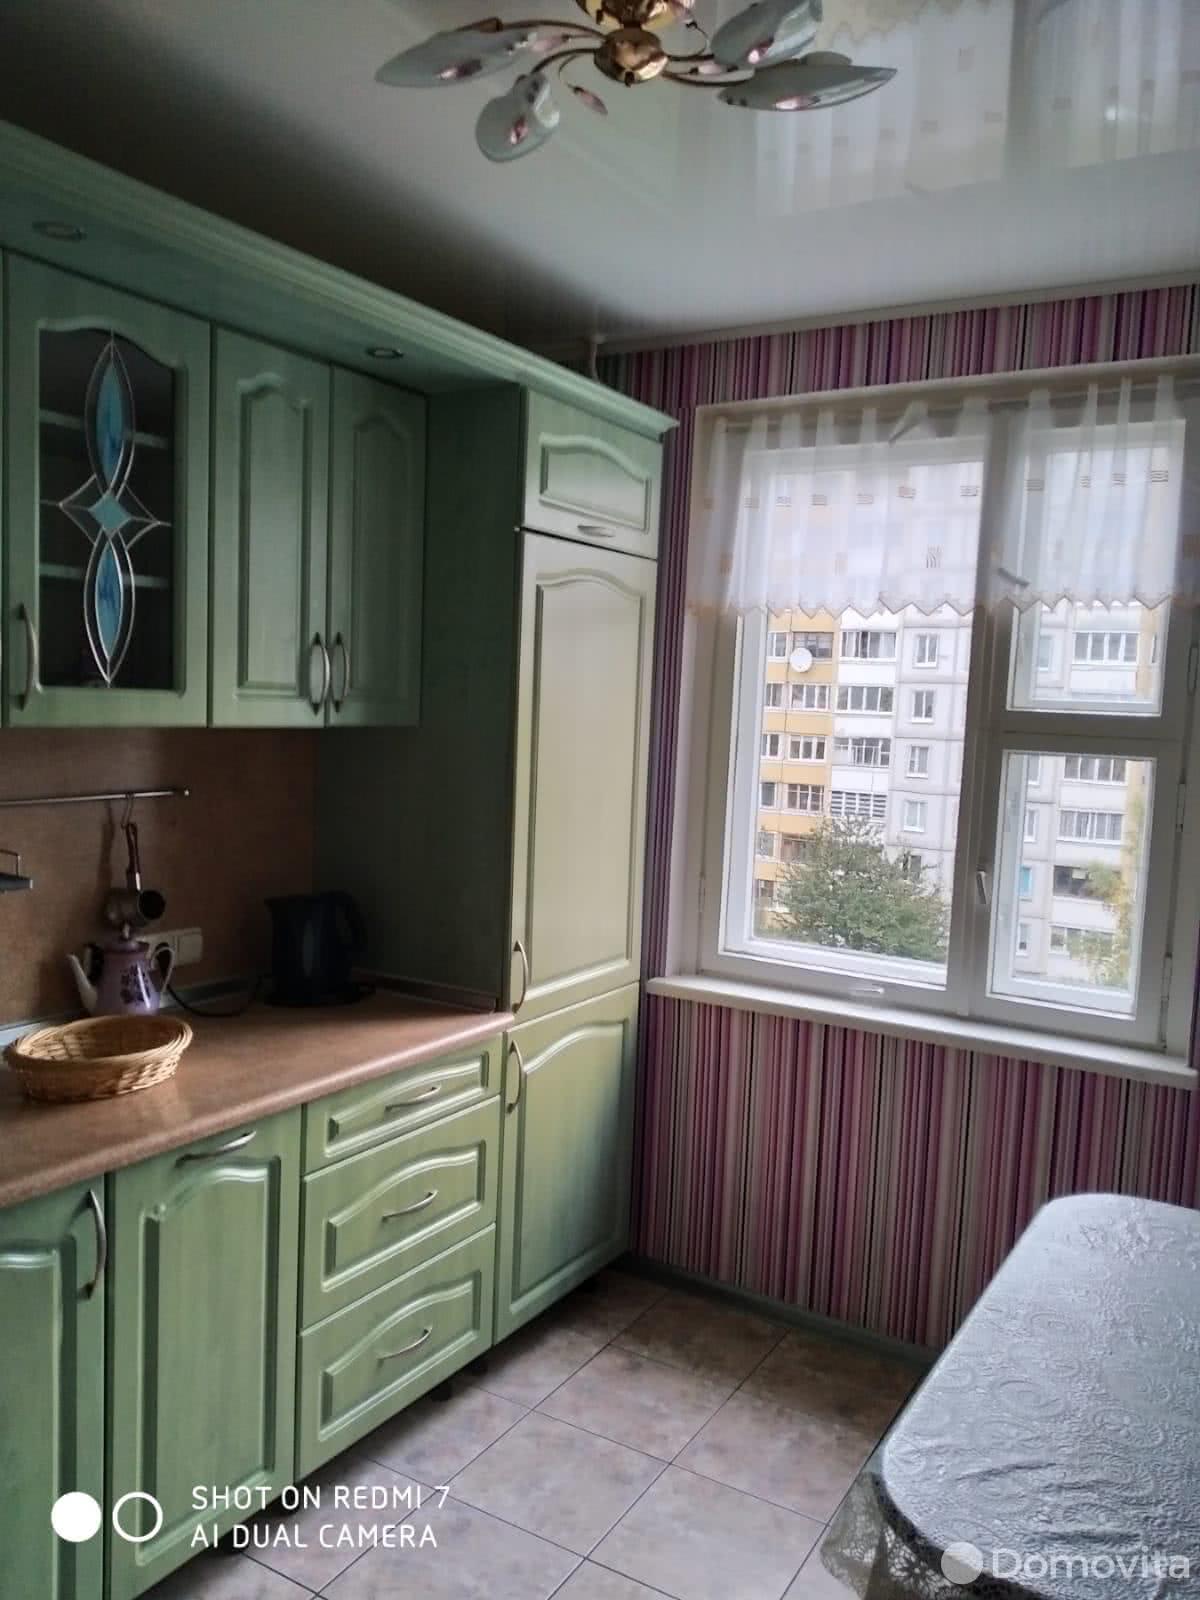 комната, Минск, ул. Рафиева, д. 90, стоимость аренды 291 р./мес.